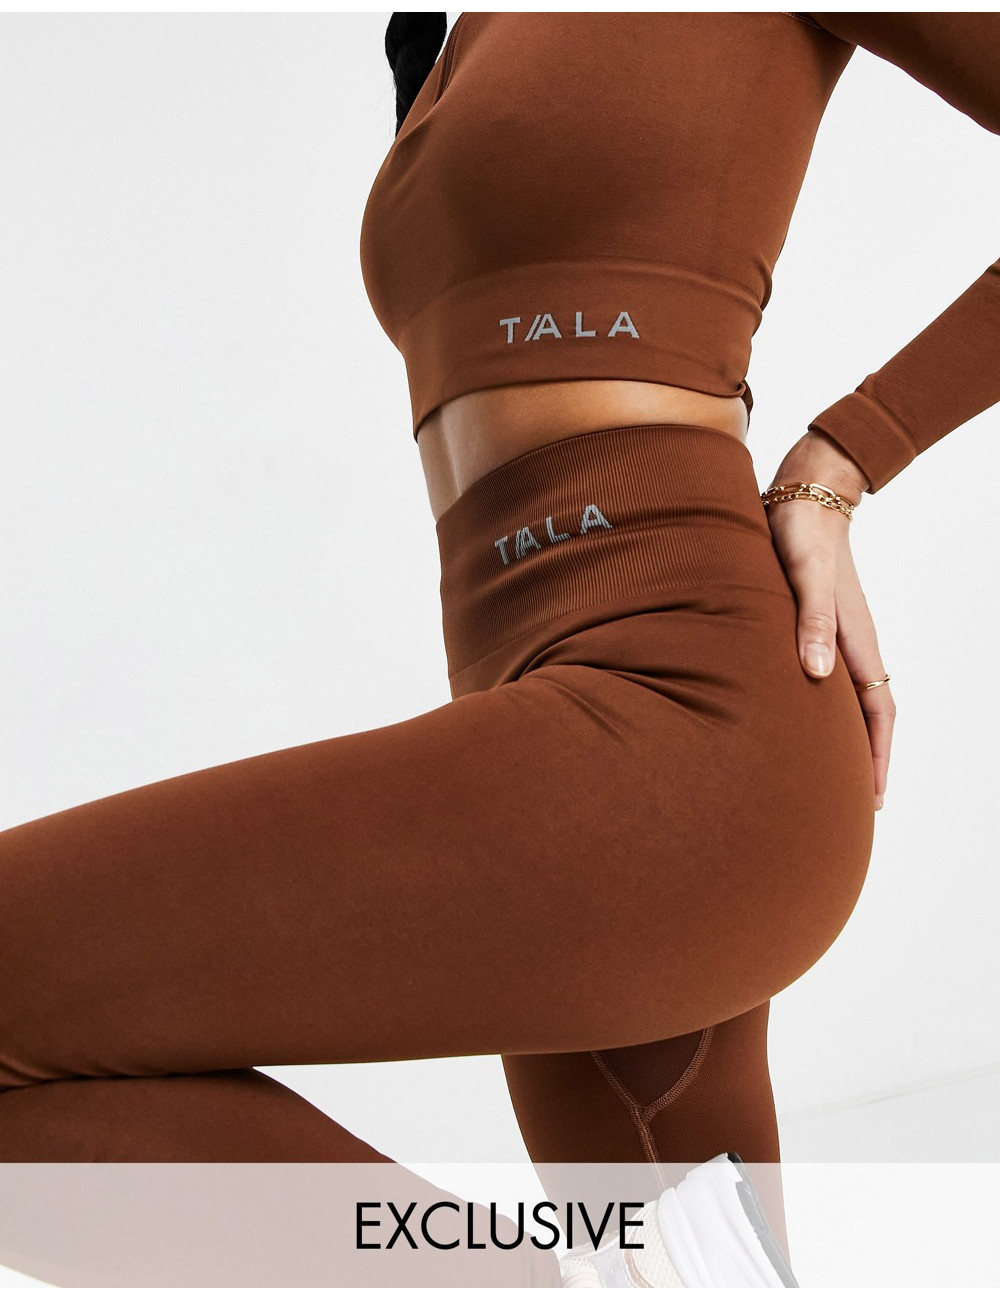 TALA Zinnia leggings in brown - exclusive to ASOS